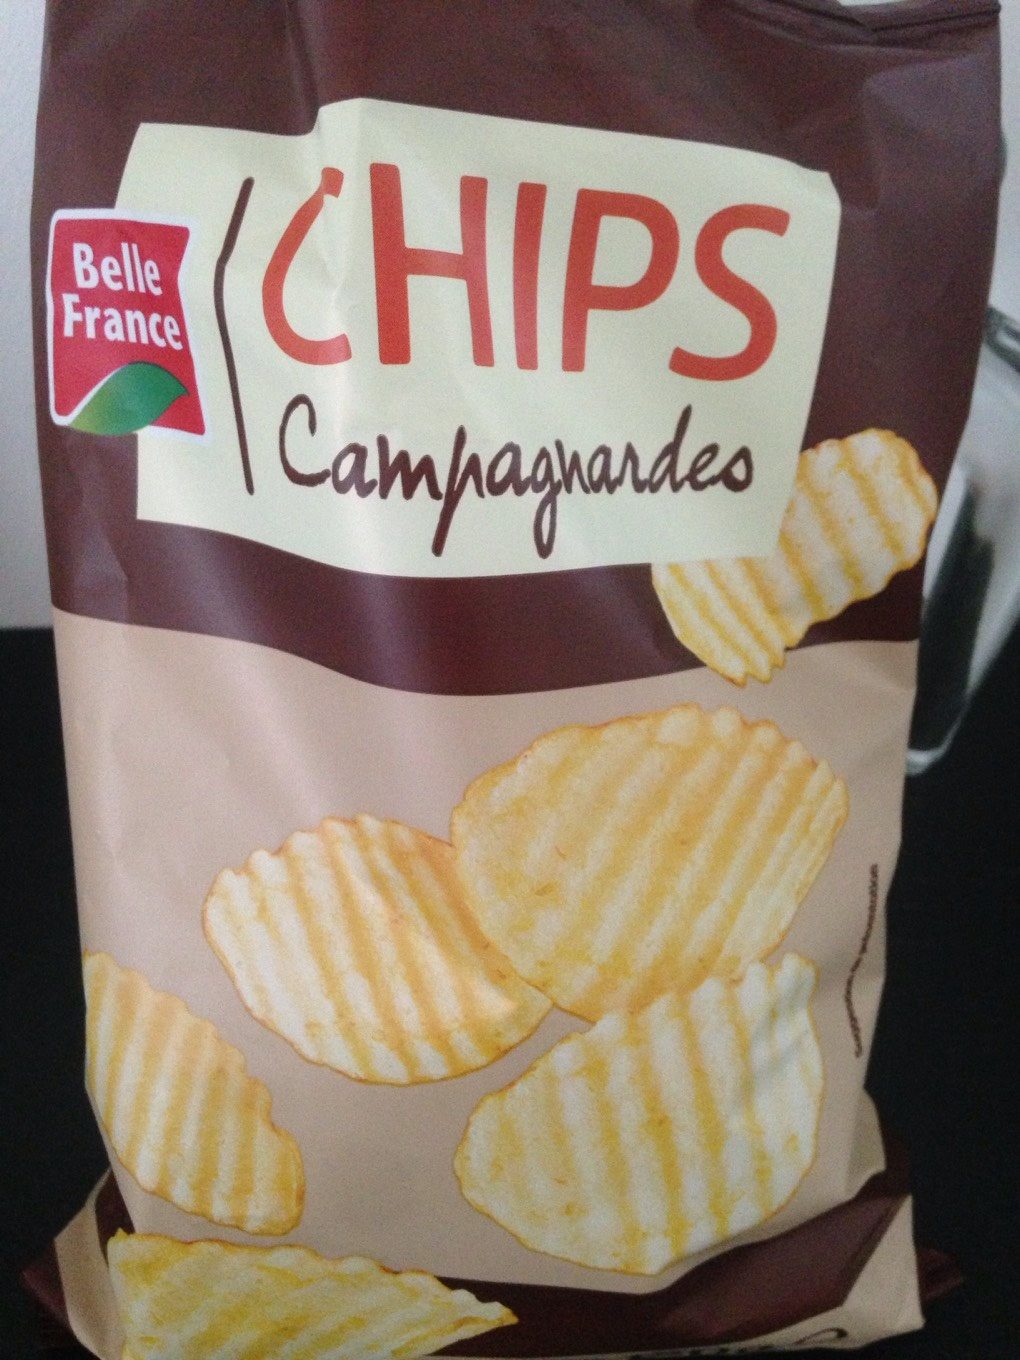 Chips Campagnardes - Produto - fr